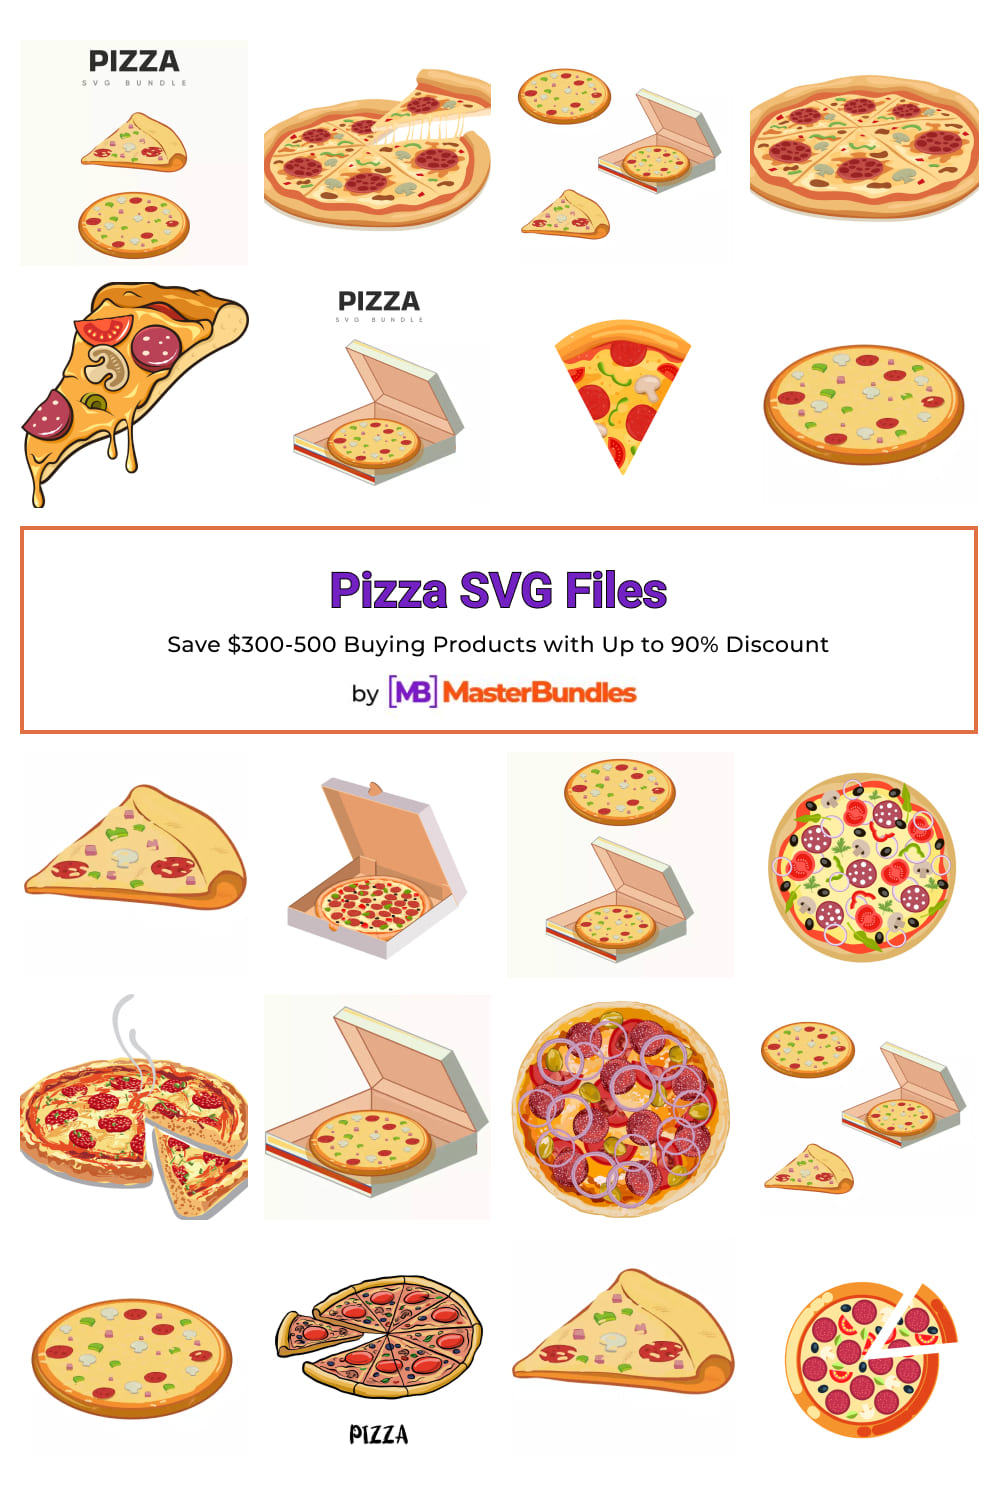 Pizza SVG Files Pinterest image.